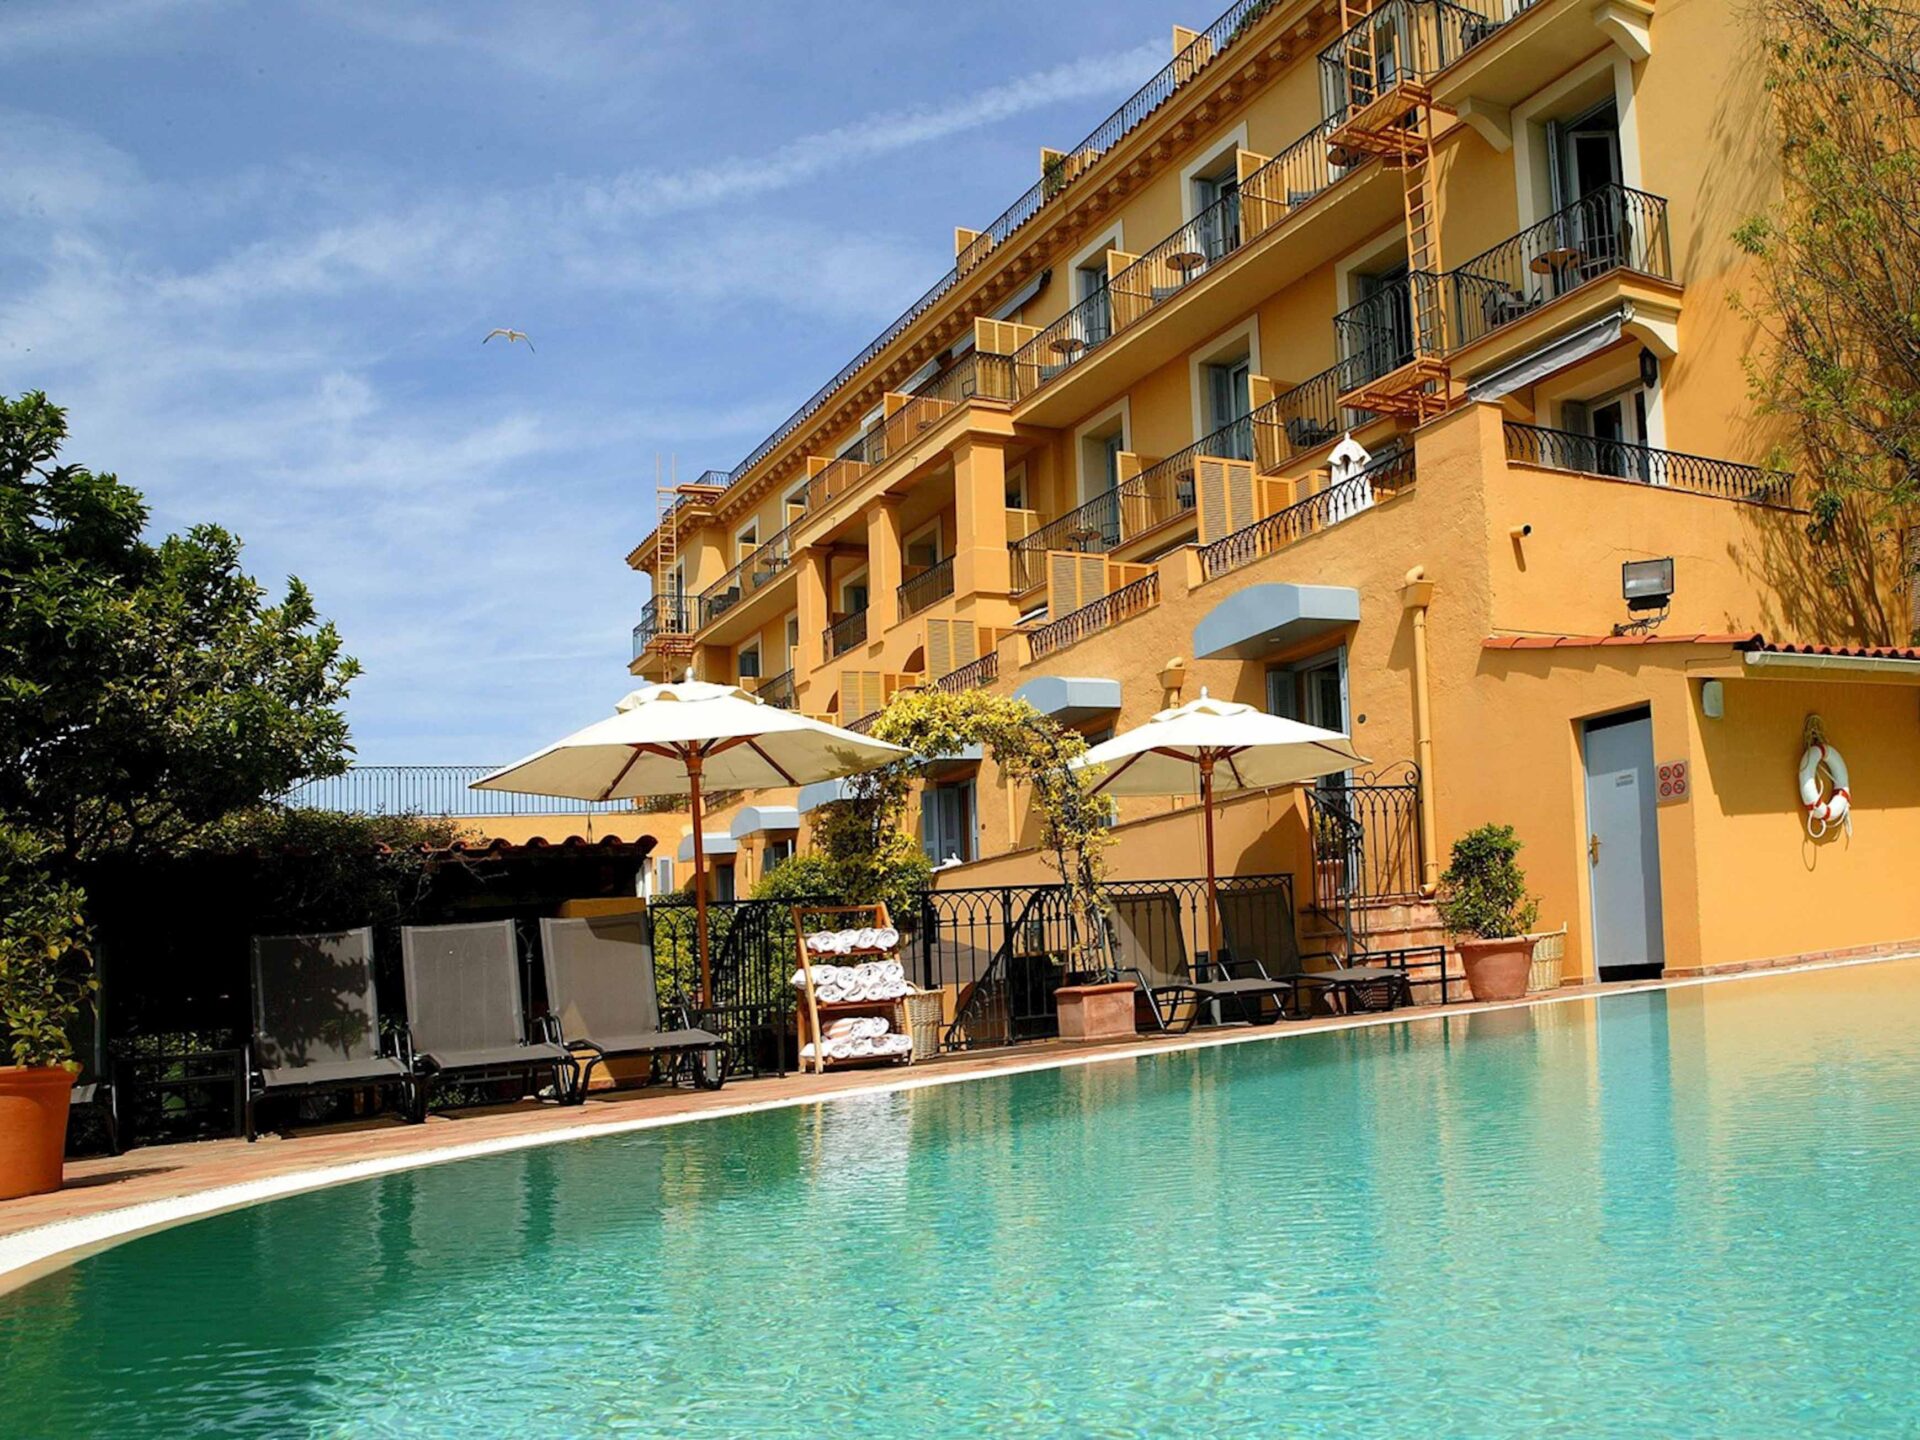 Best hotels in France - Hotel La Pérouse, Nice